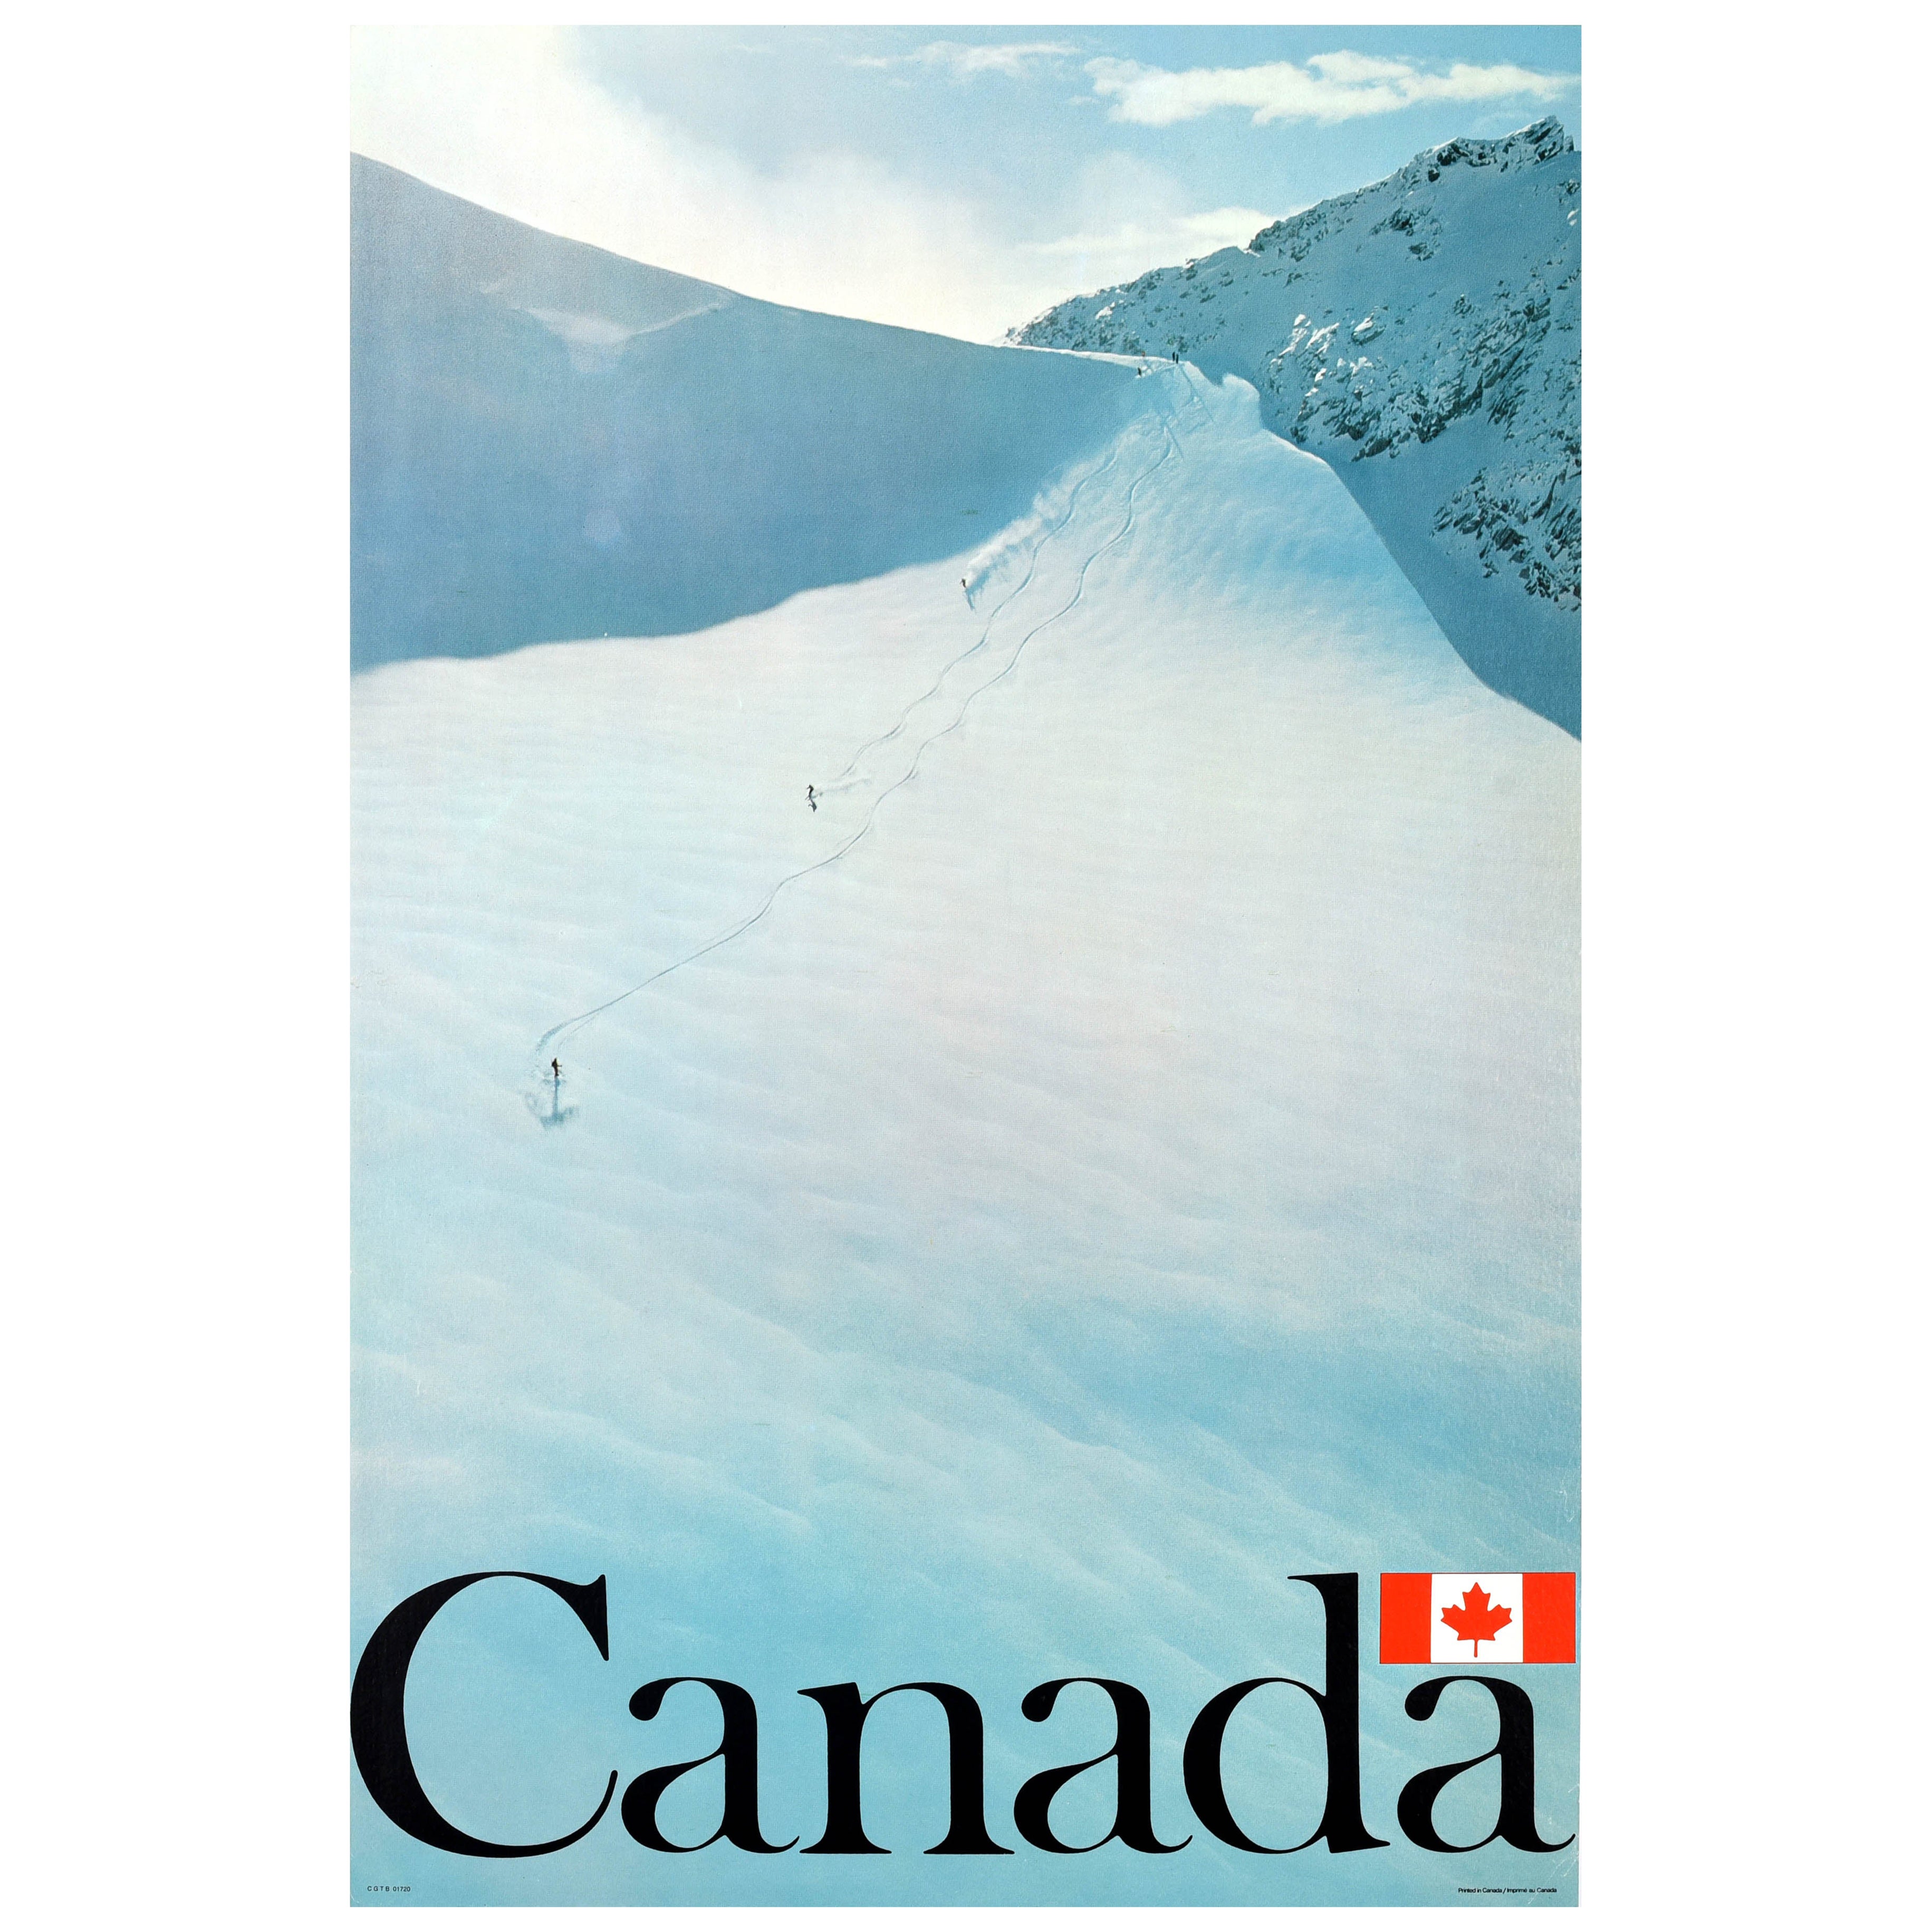 Original Vintage Travel Poster Canada Ski Slope Winter Sports Mountain Skiing